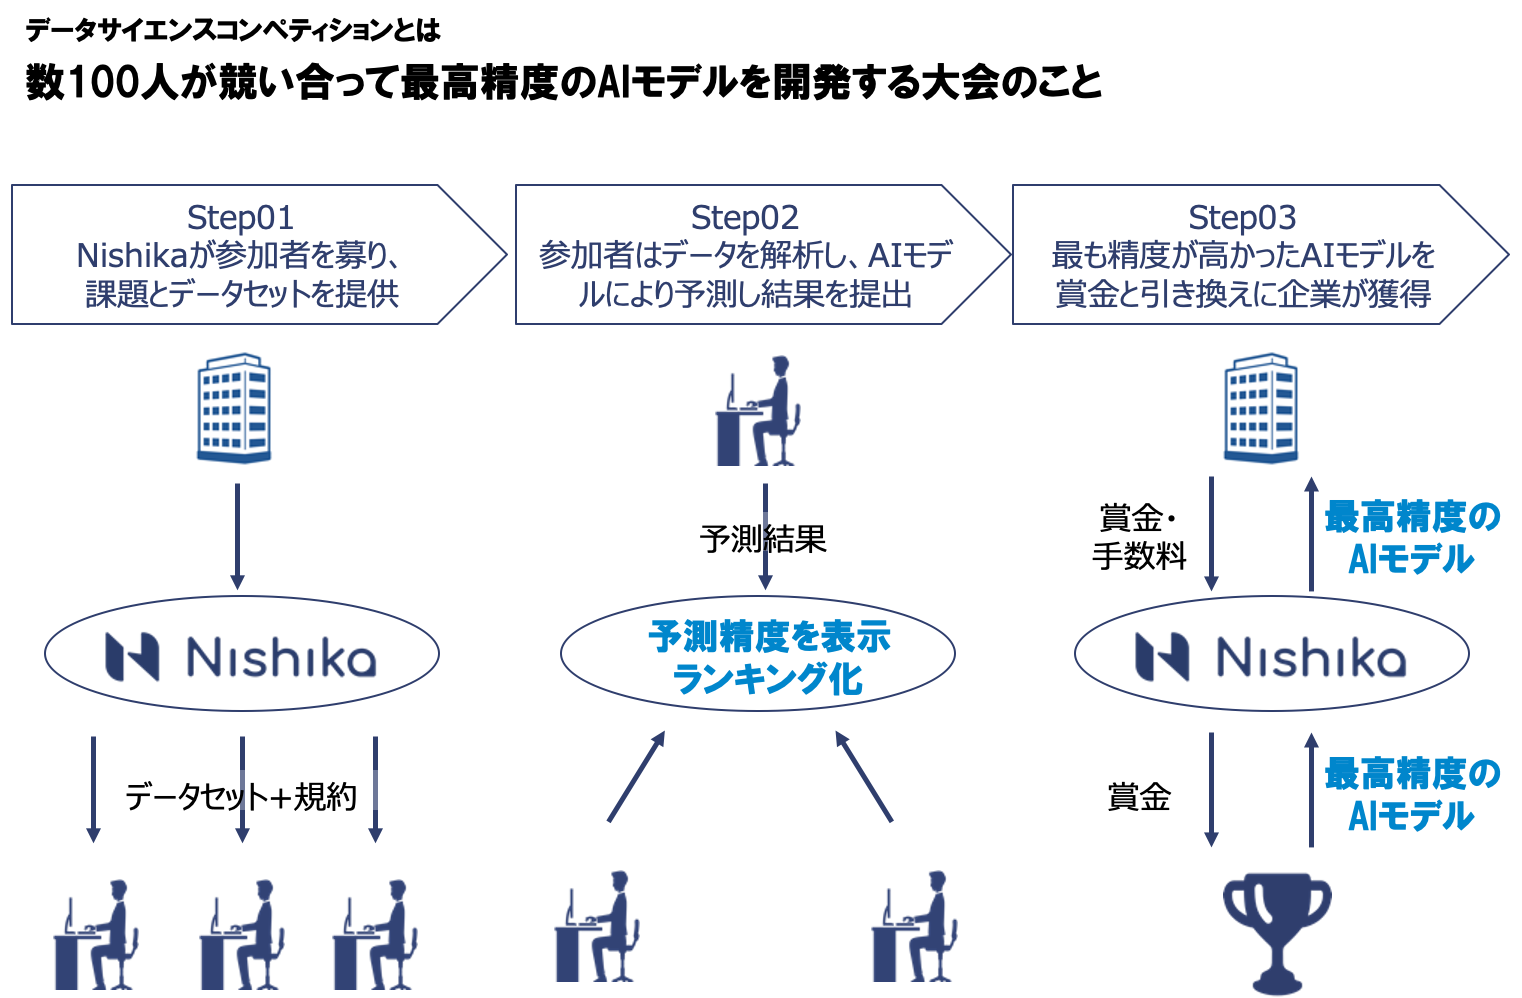 Nishikaが新たなデータサイエンスコンペティション Jリーグプレイヤーの出場時間予測 を開始 Nishika株式会社のプレスリリース